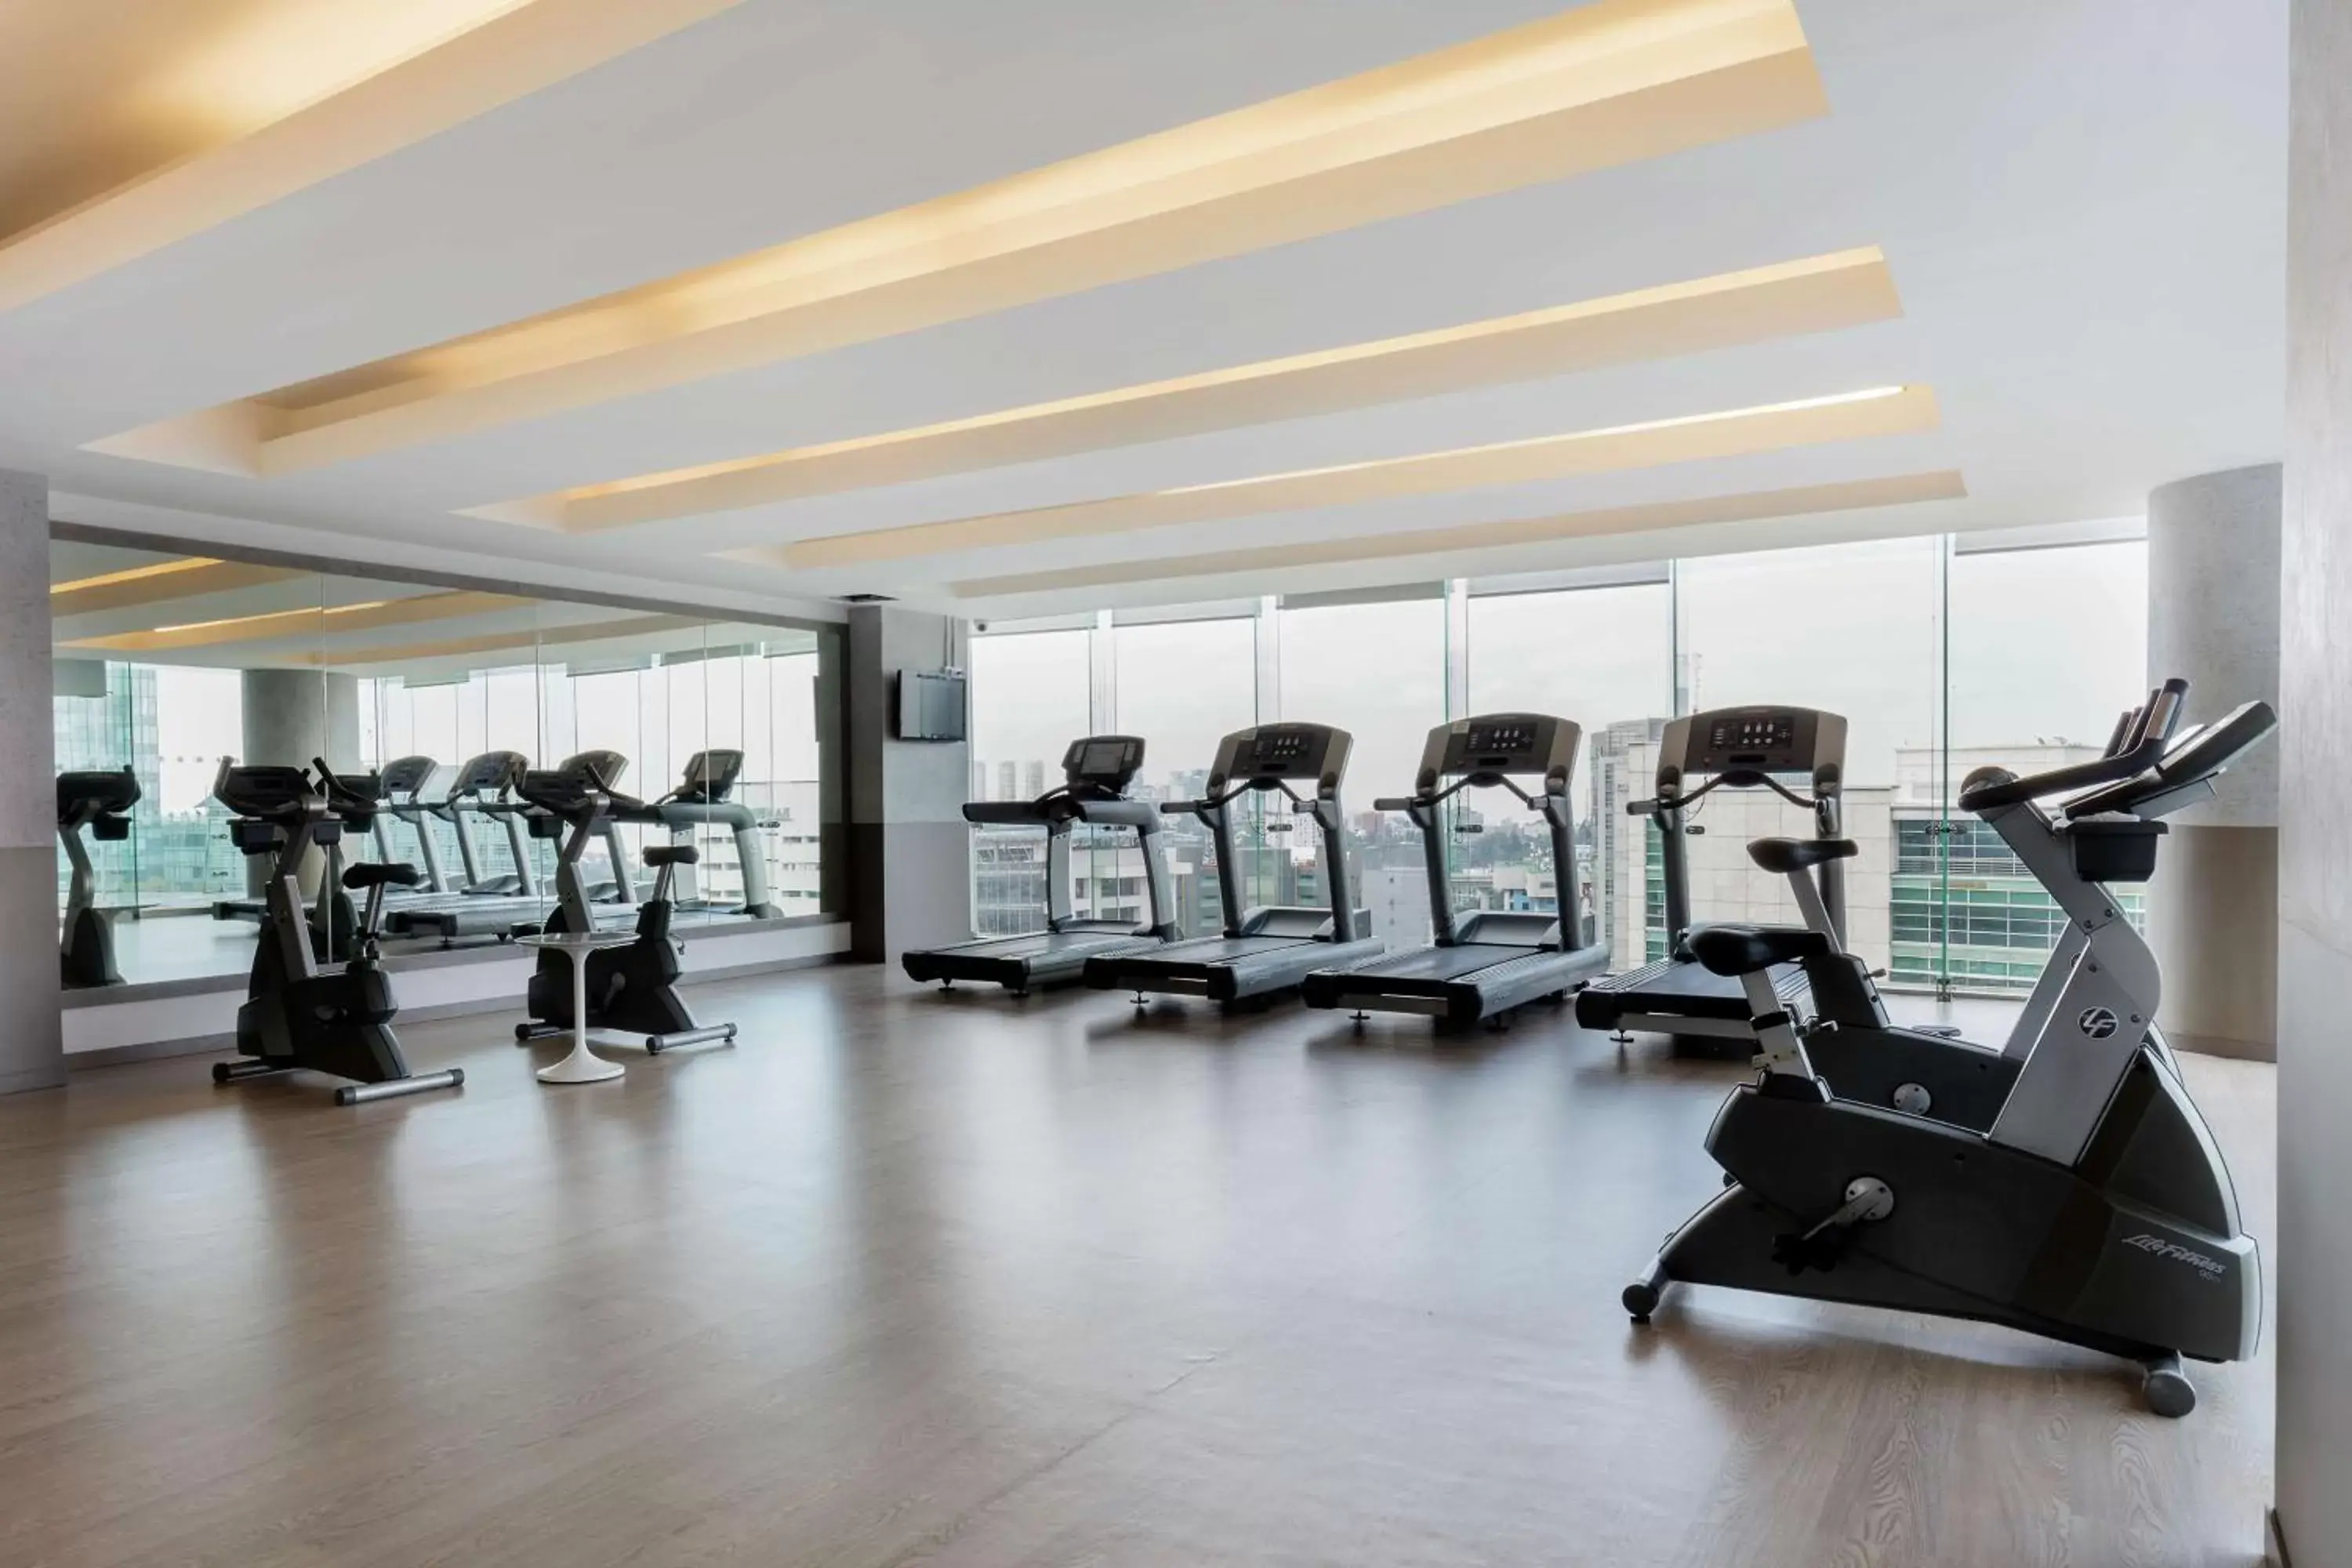 Fitness centre/facilities, Fitness Center/Facilities in Hilton Garden Inn Mexico City Santa Fe